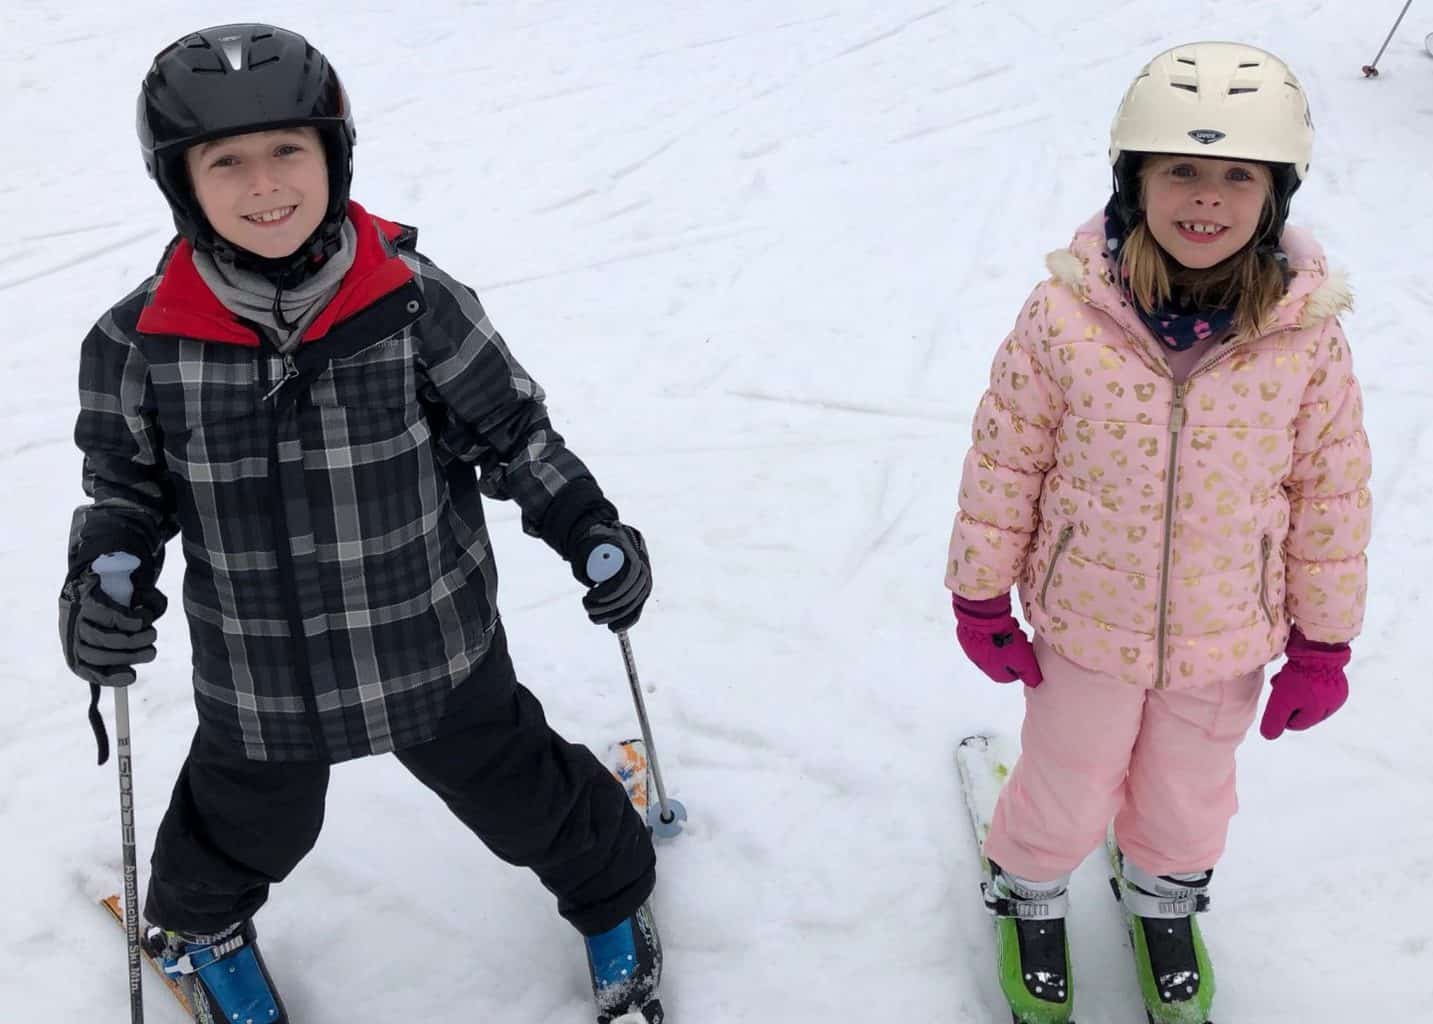 Ski Trip Packing List With Kids: What to Wear on a Ski Trip